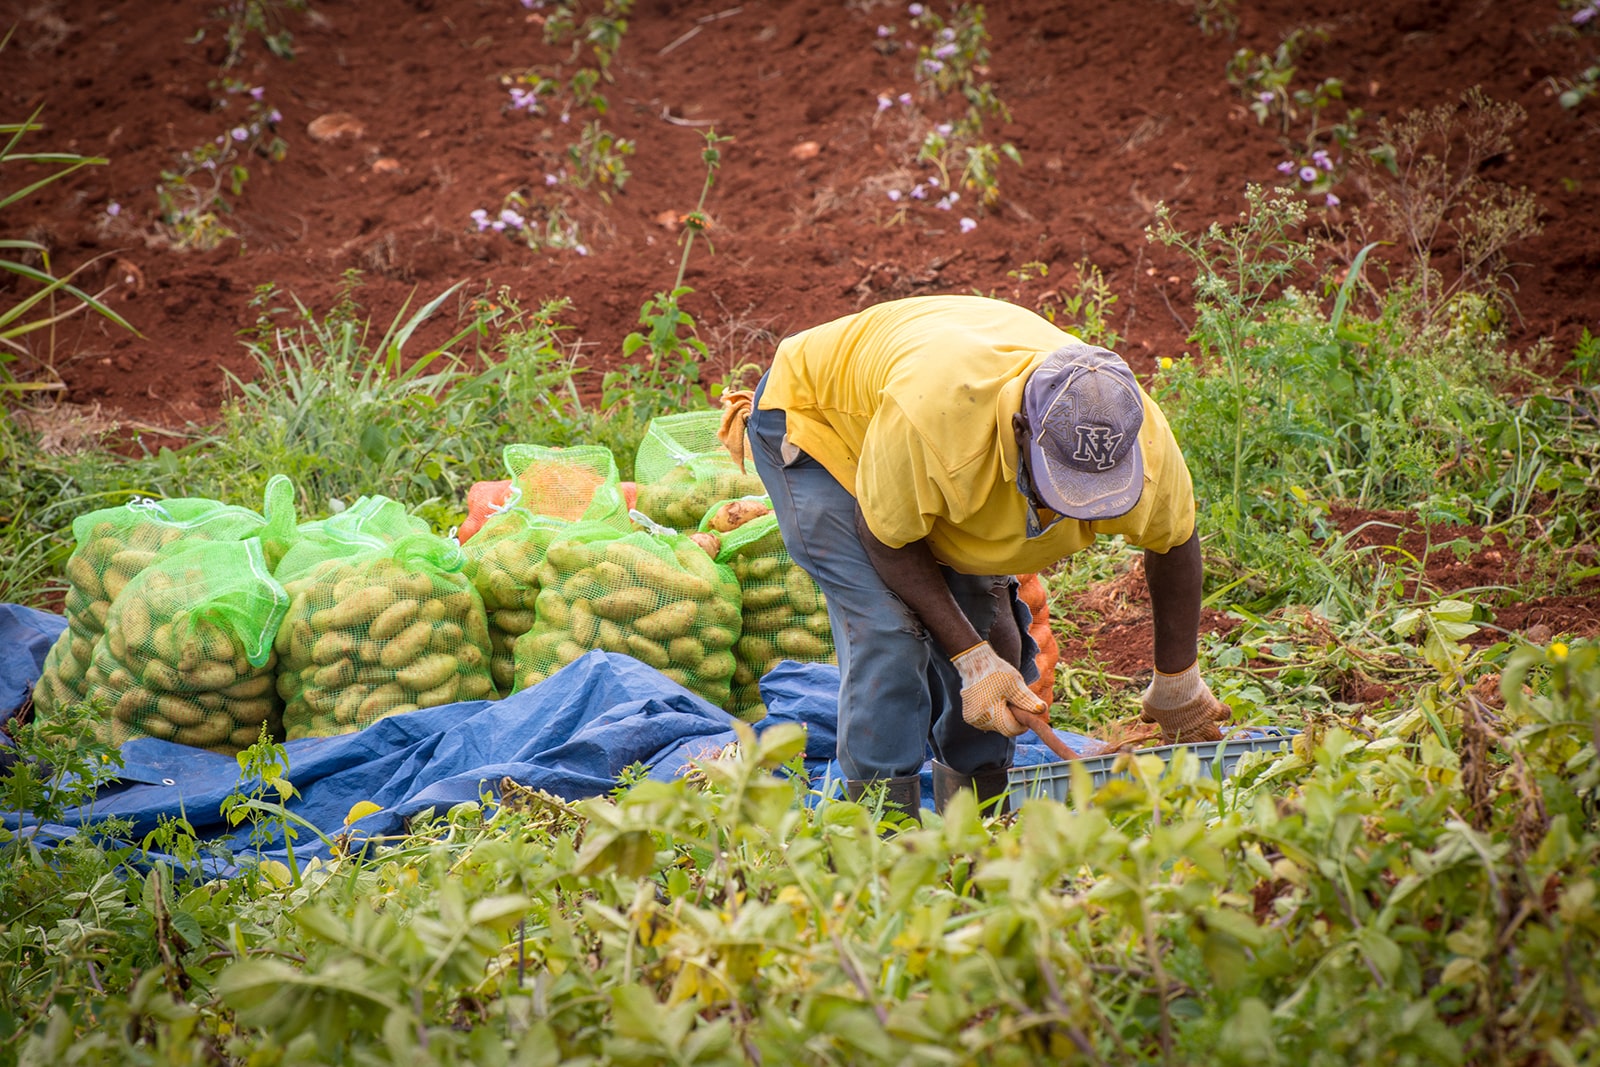 Worker In Field Harvesting Potatoes